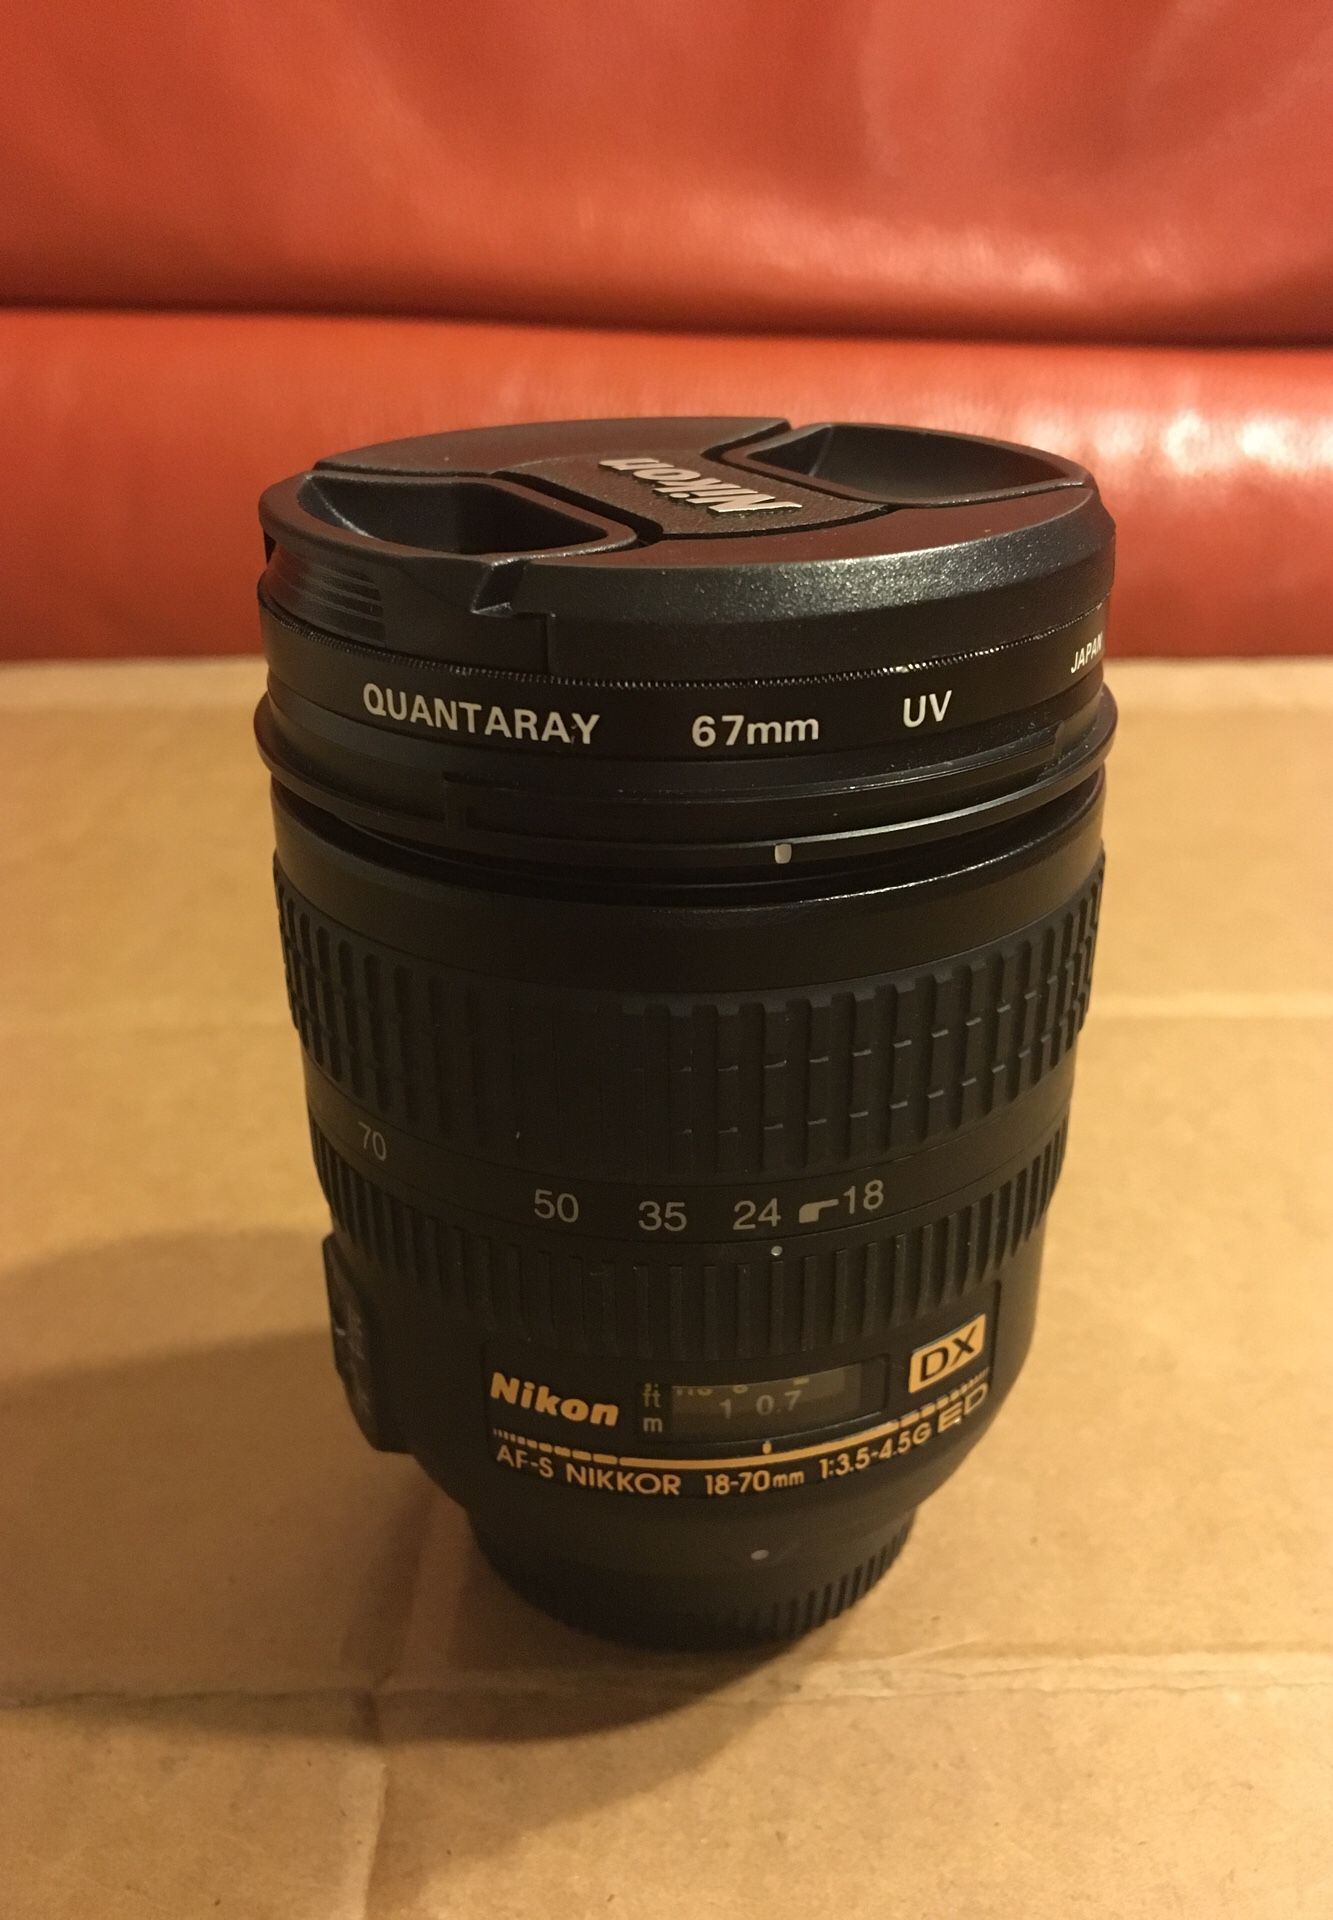 Nikon 18-70 mm DX with Quantaray filter